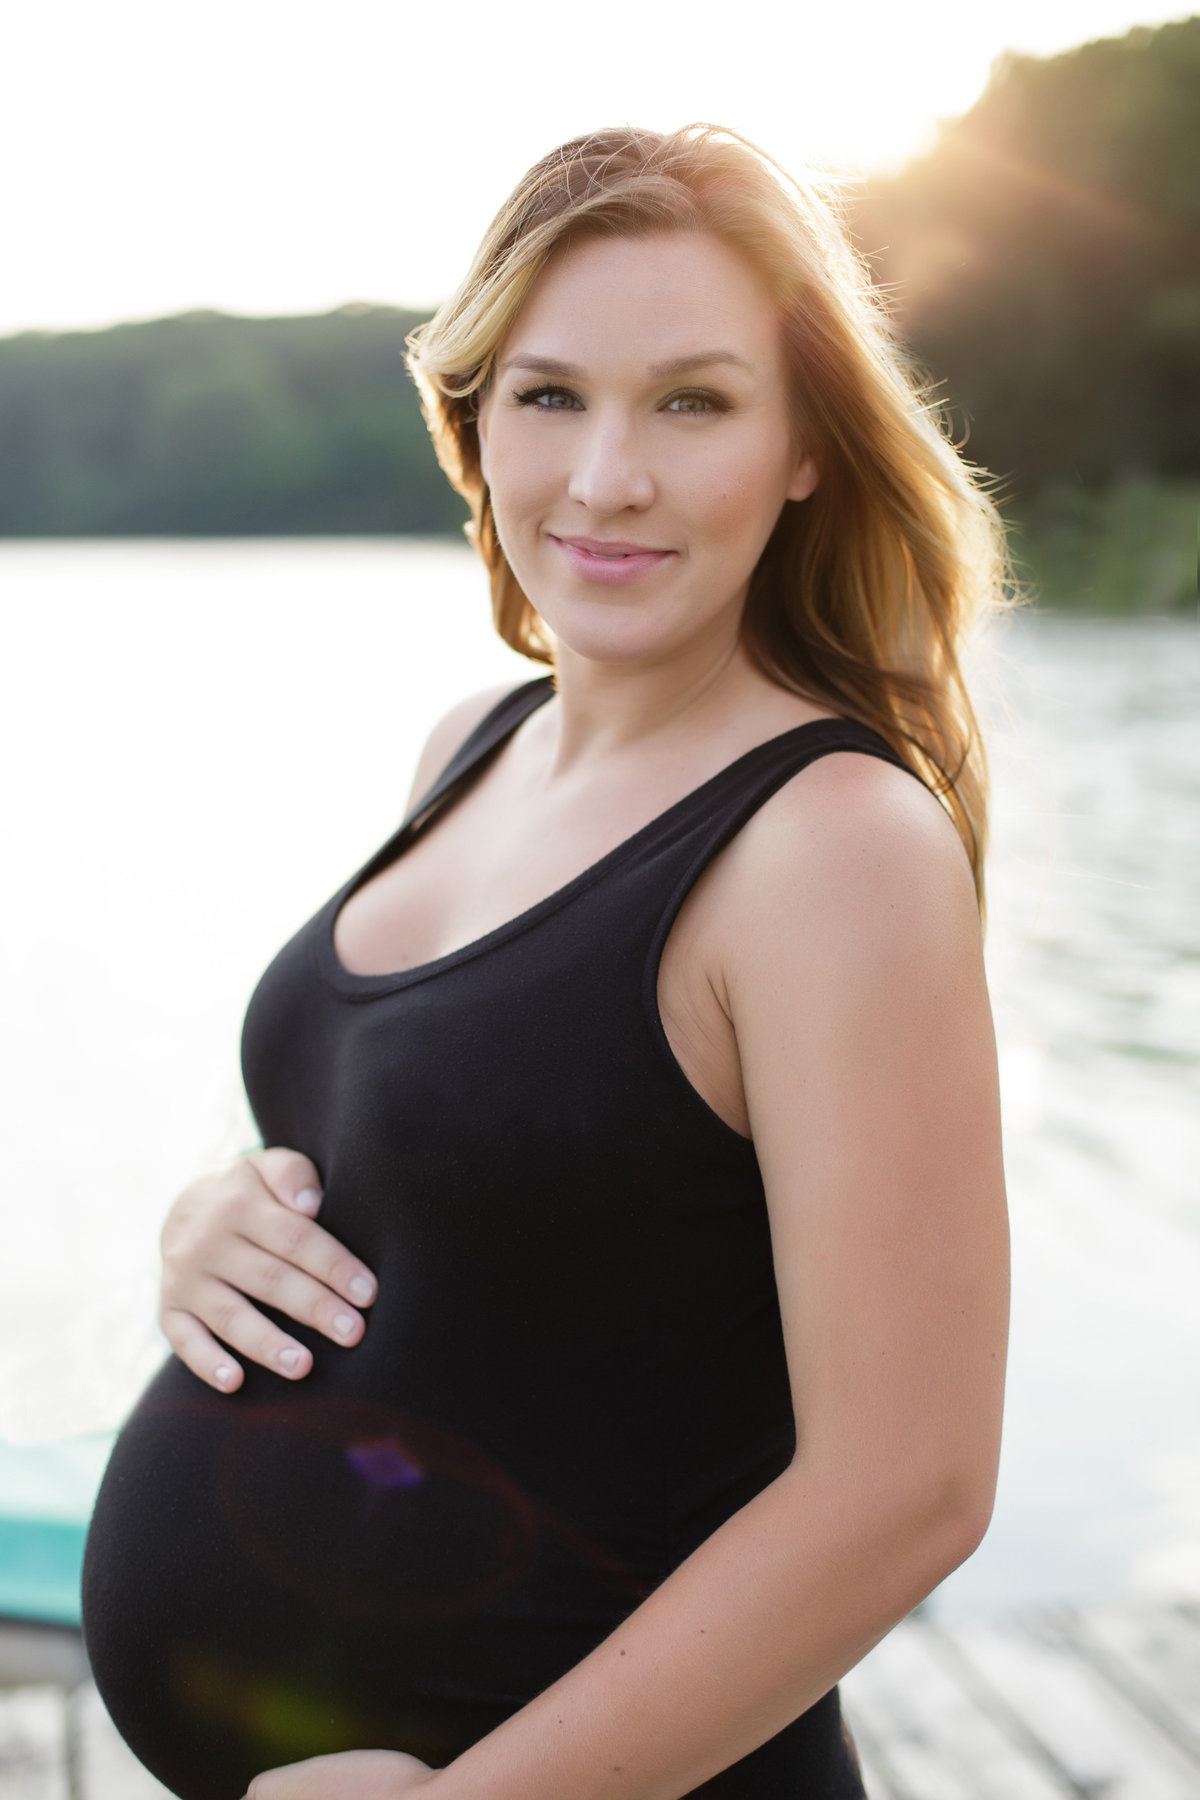 Maternity photo by the lake - Jen Madigan - Naperville Maternity Photographer